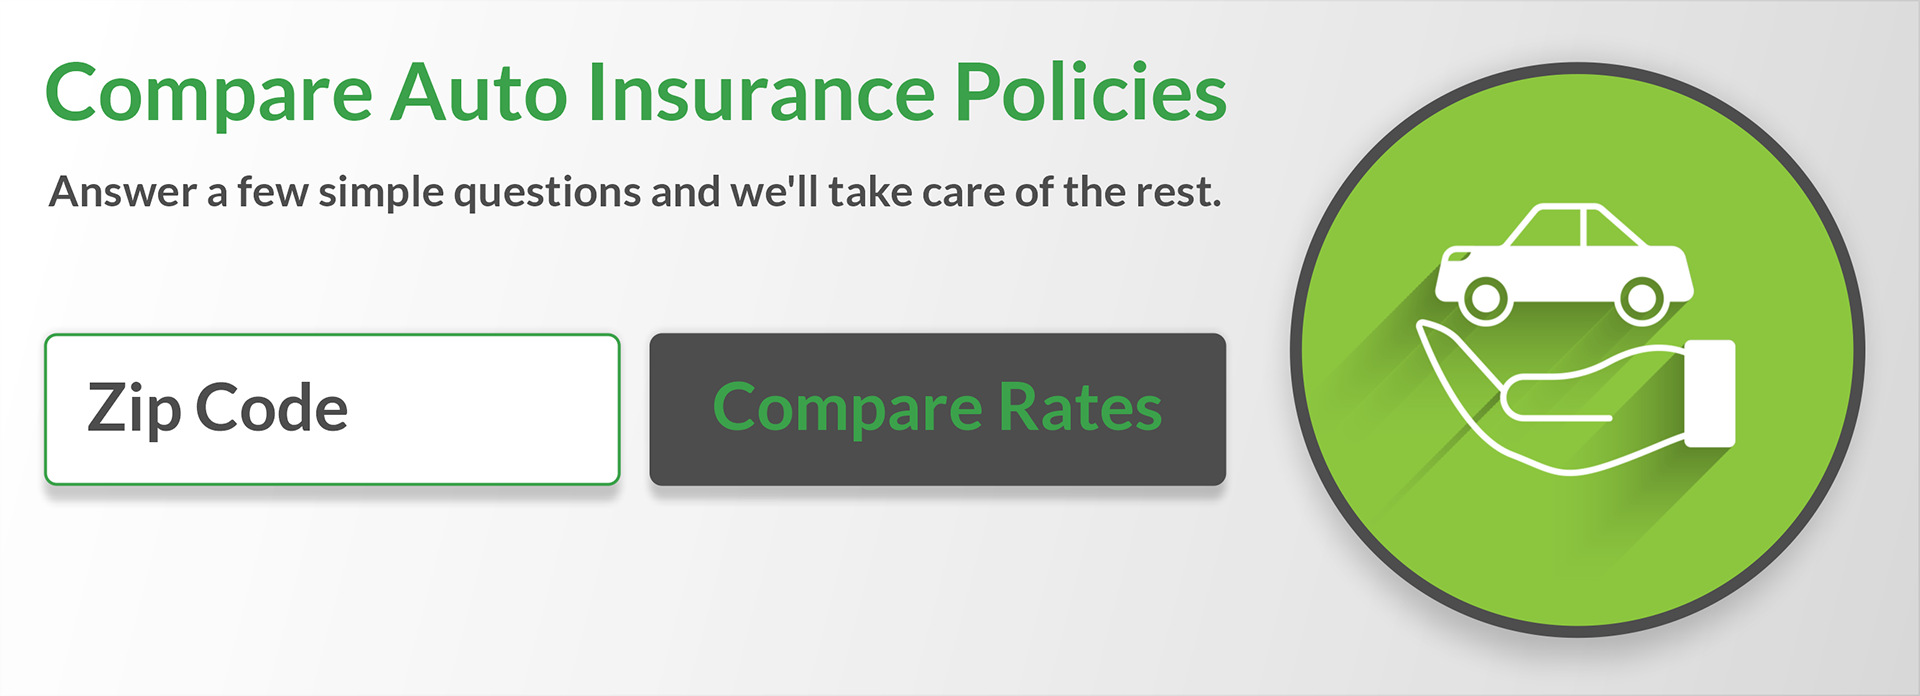 MW - Compare Auto Insurance PoliciesV3.png